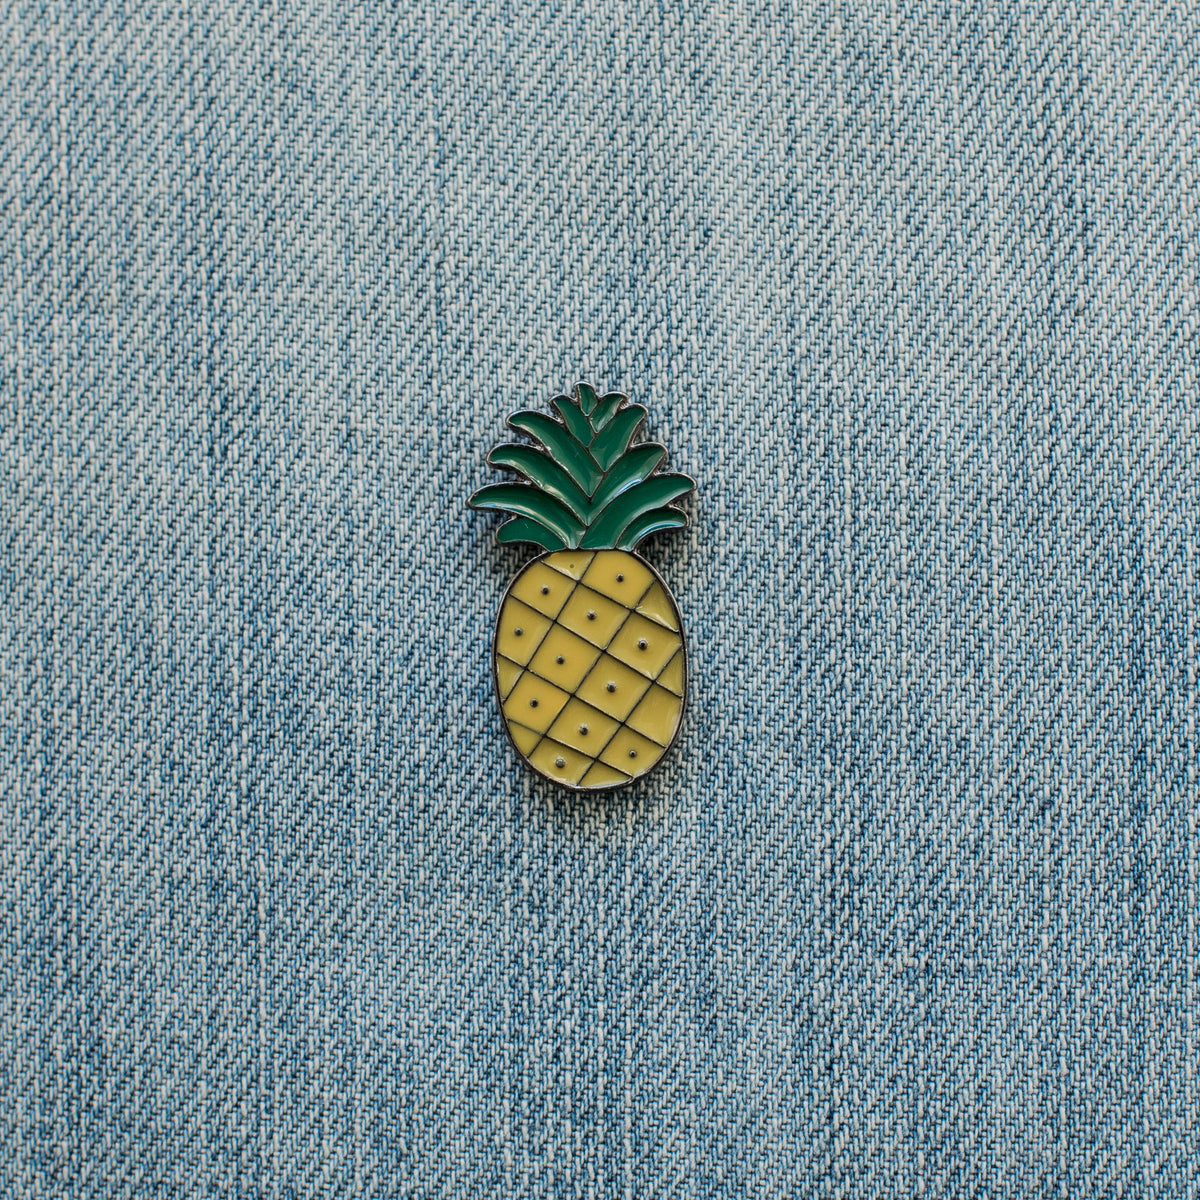 pineapple enamel pin on denim